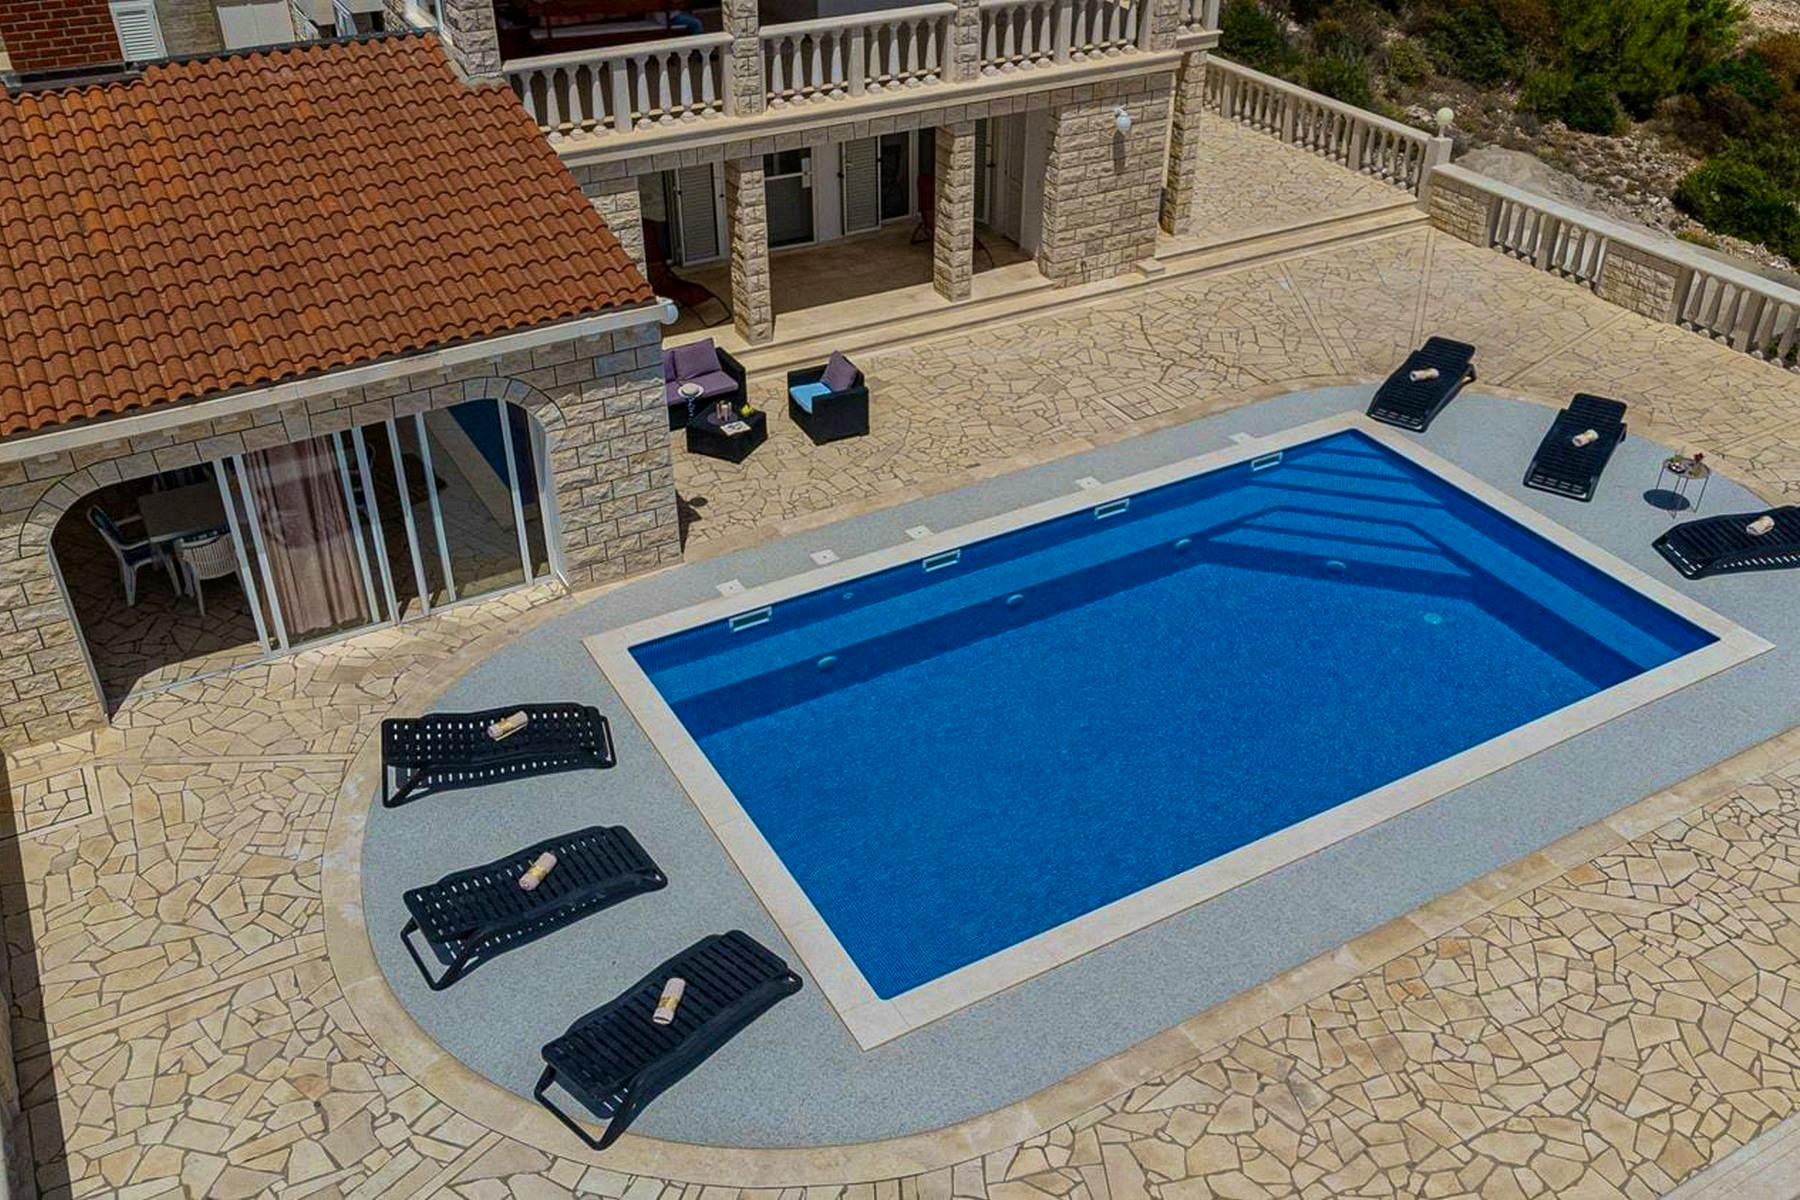 Well-arranged poolside area